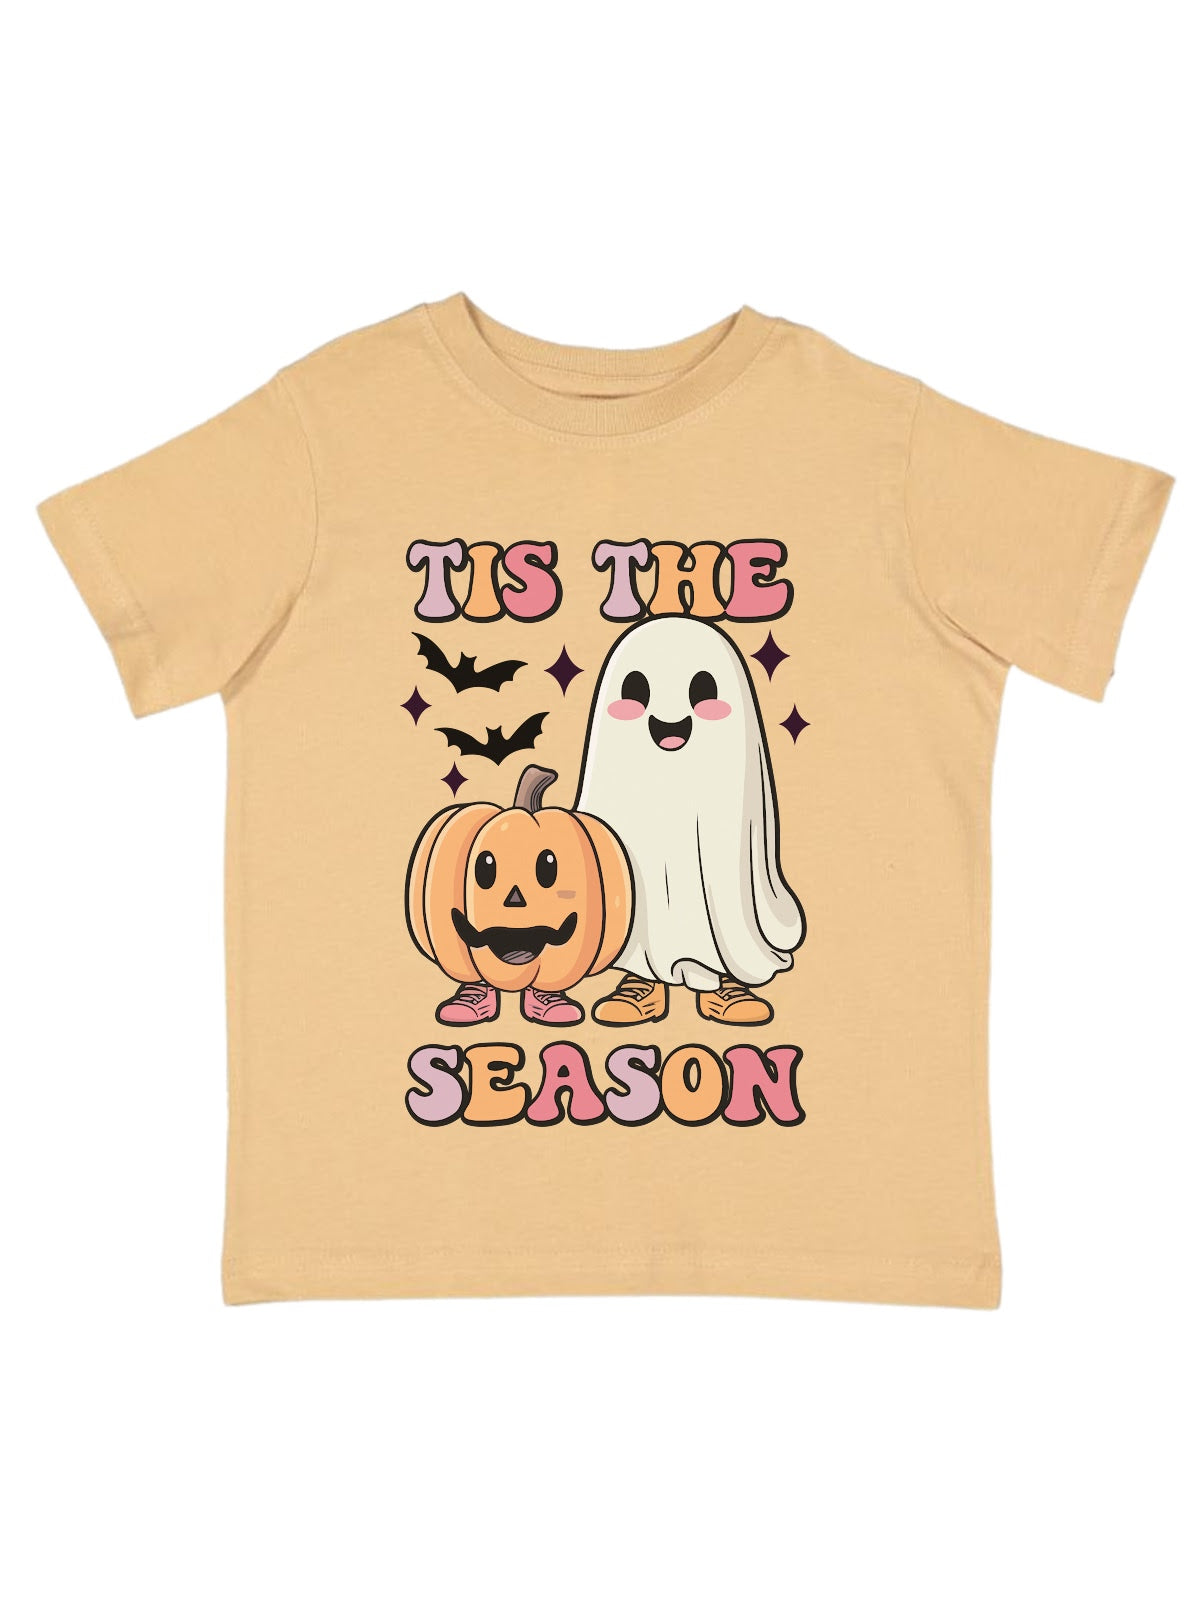 Tis the Season Kids Halloween Shirt